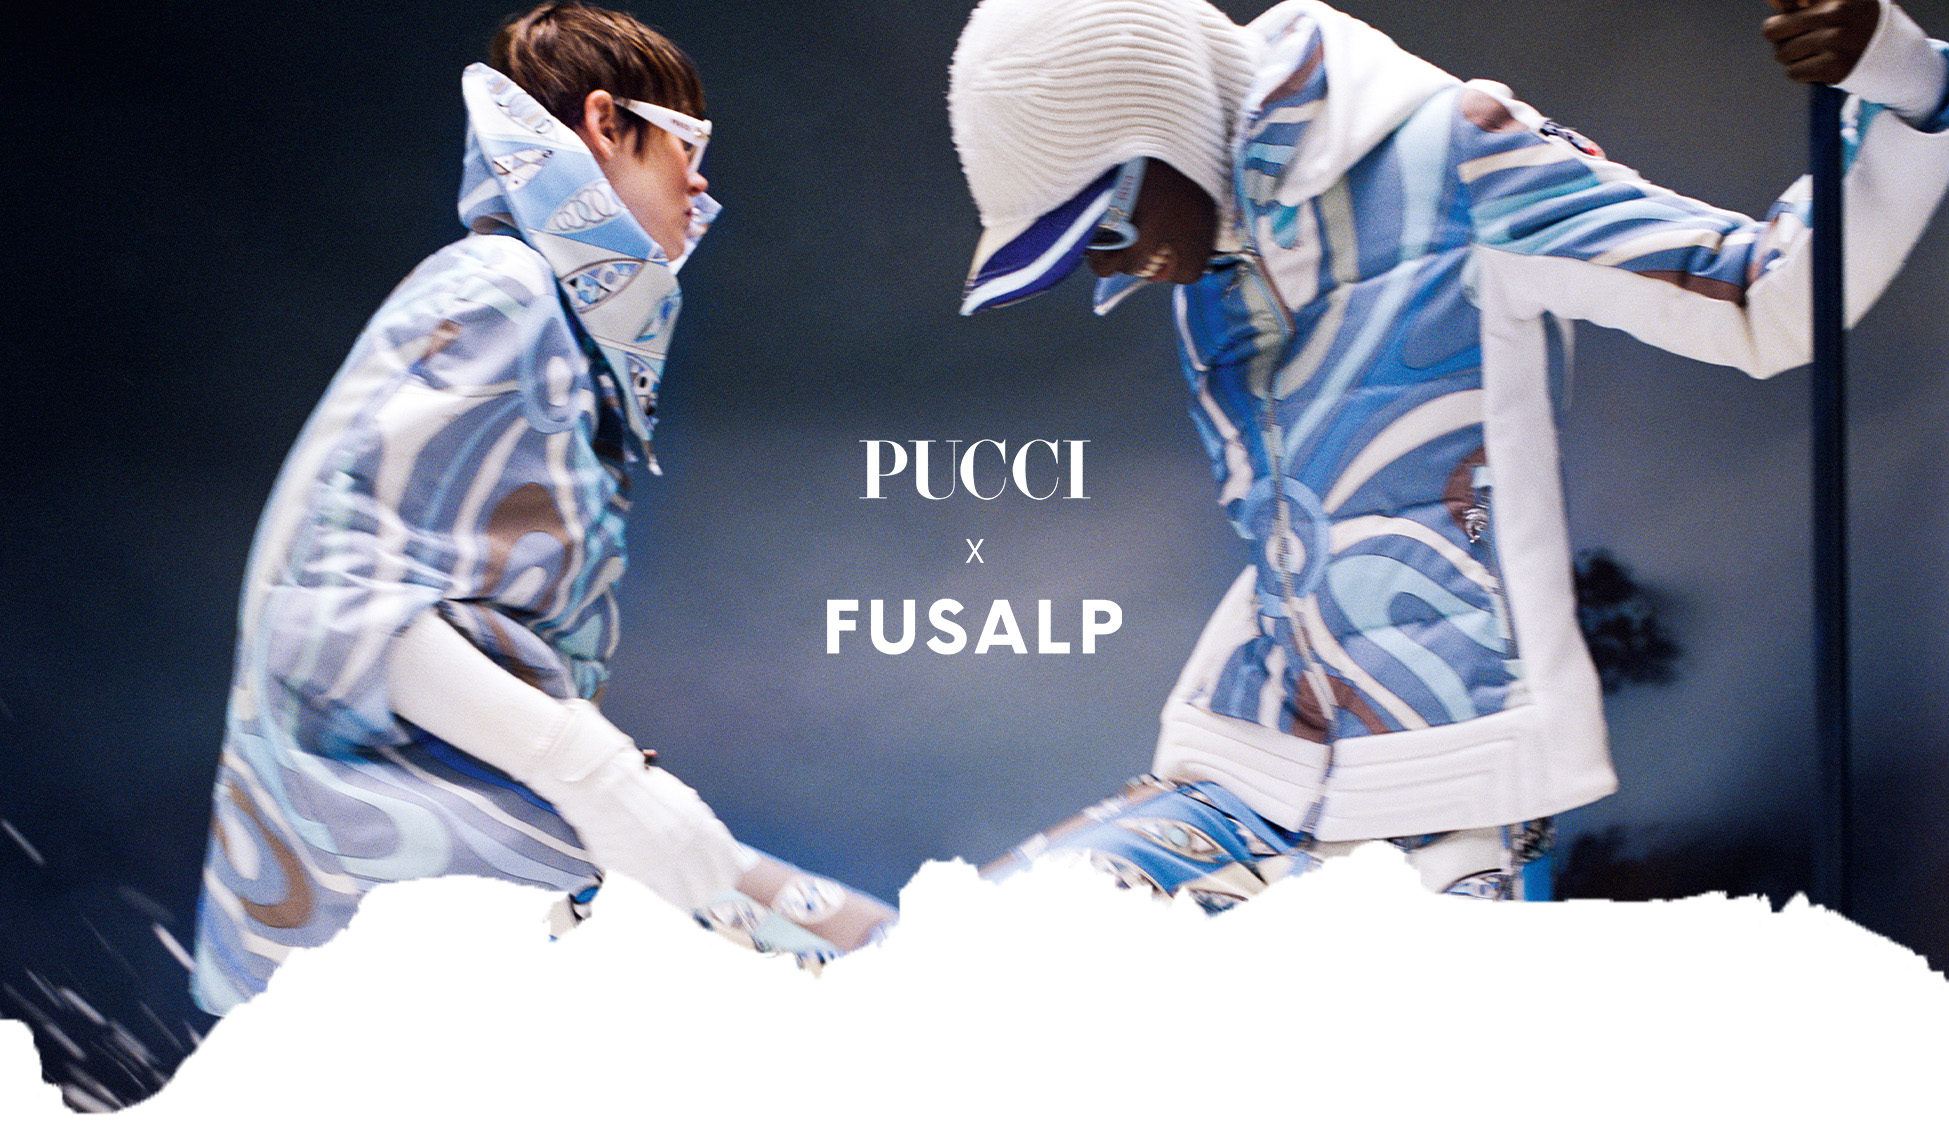 Fusalp x Pucci